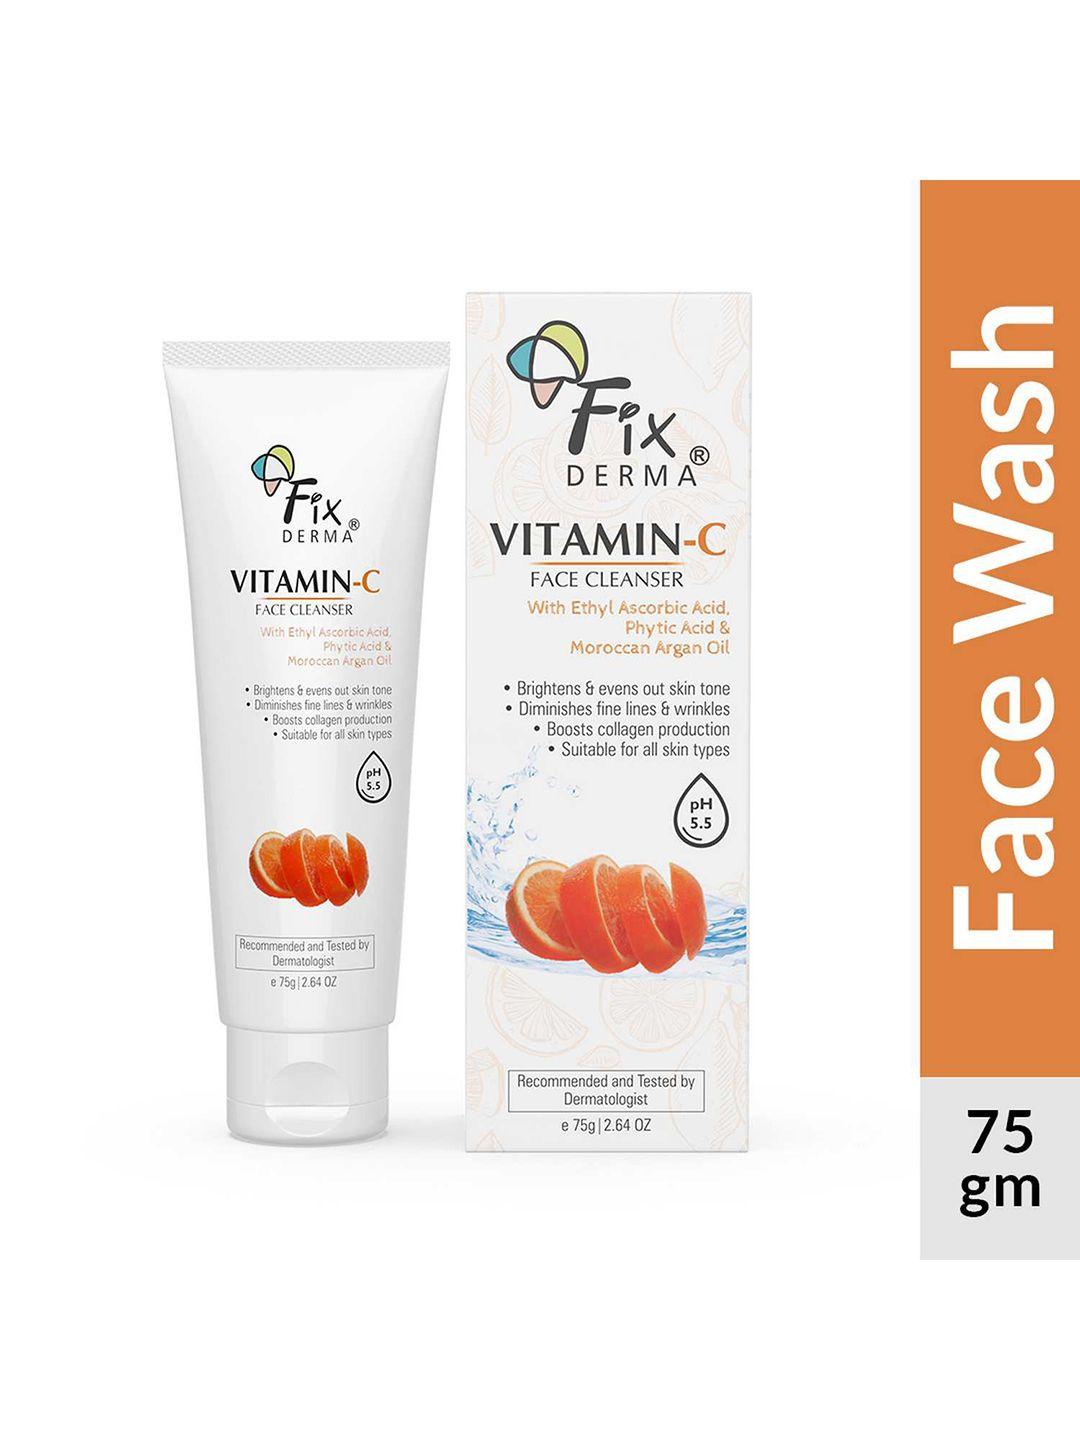 fixderma vitamin c with ascorbic acid face cleanser  75g